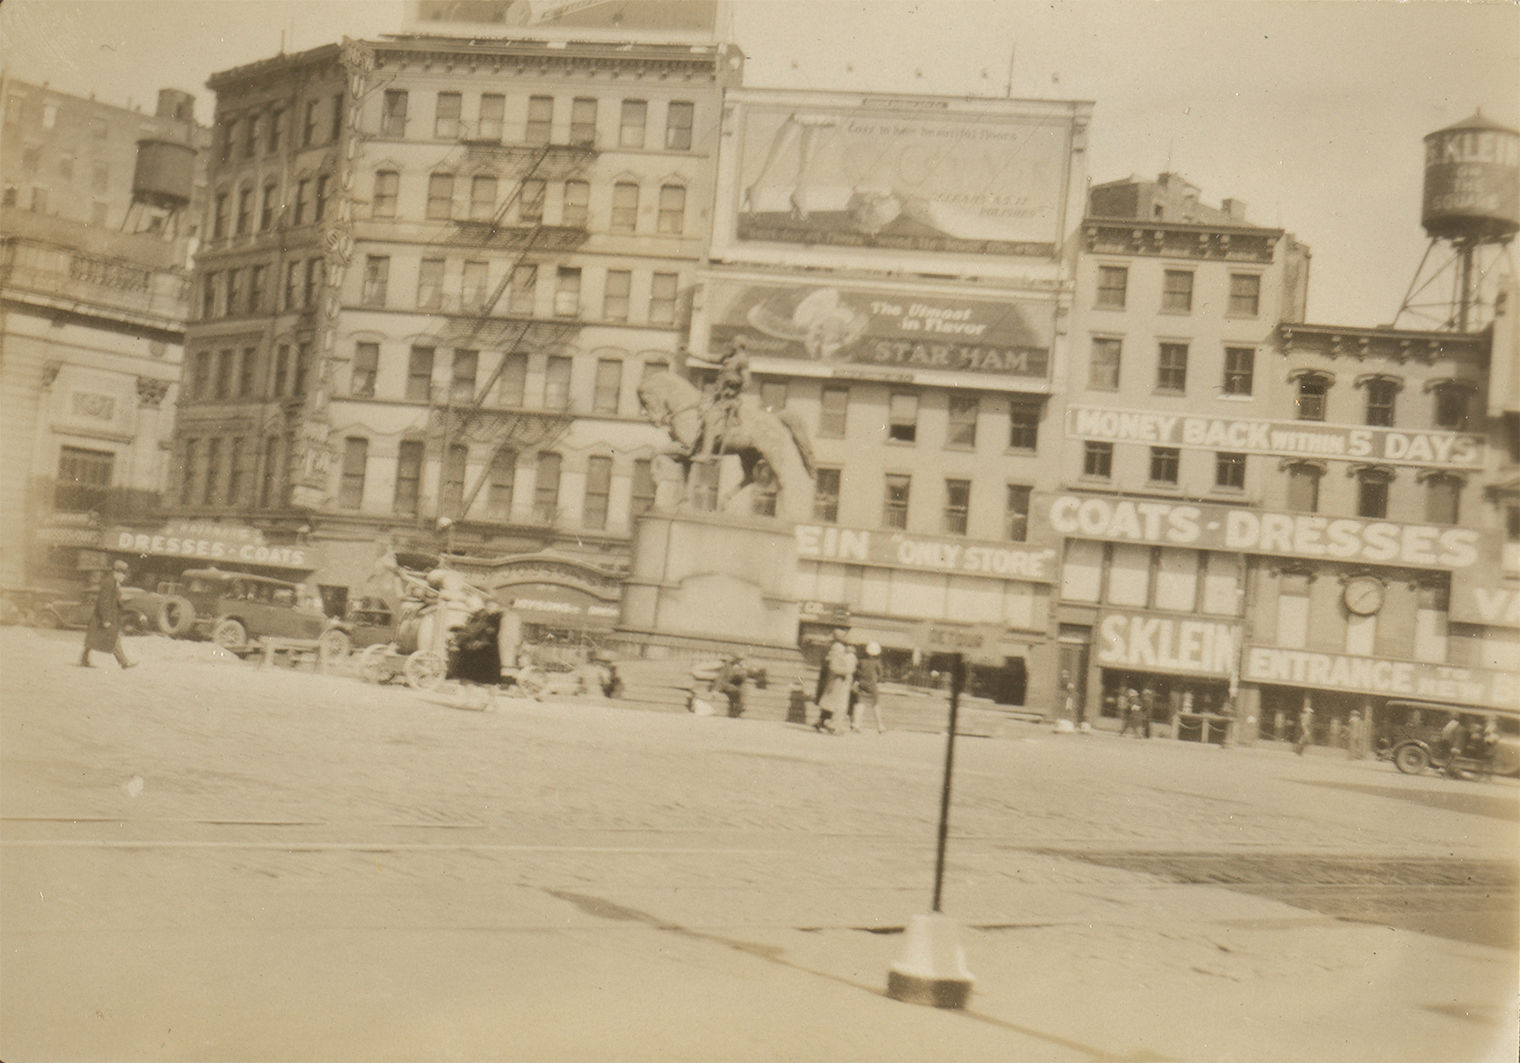 Shot of Union Square from 1929 from Berenice Abbott's New York Album. 